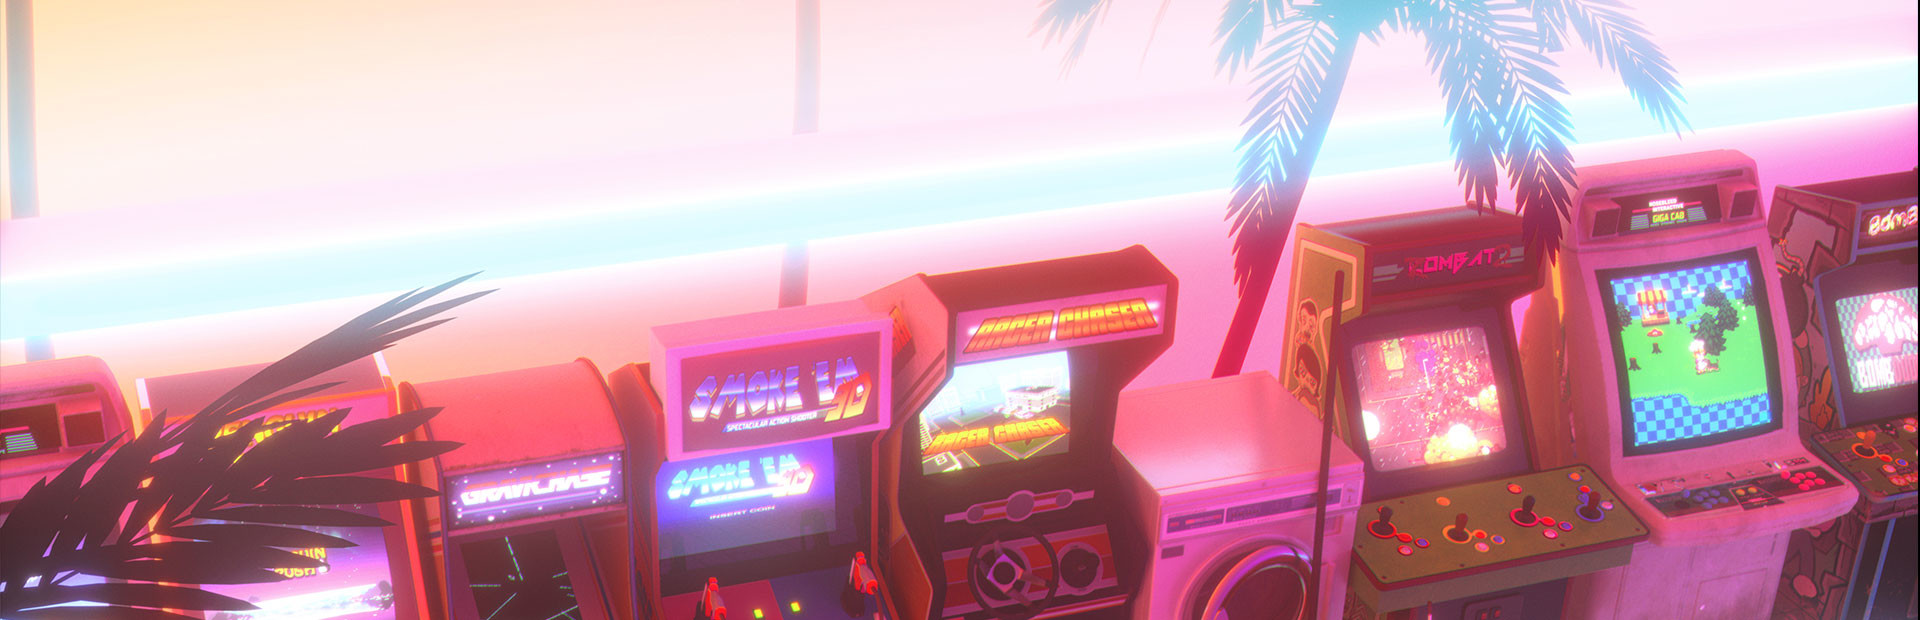 Arcade Paradise cover image